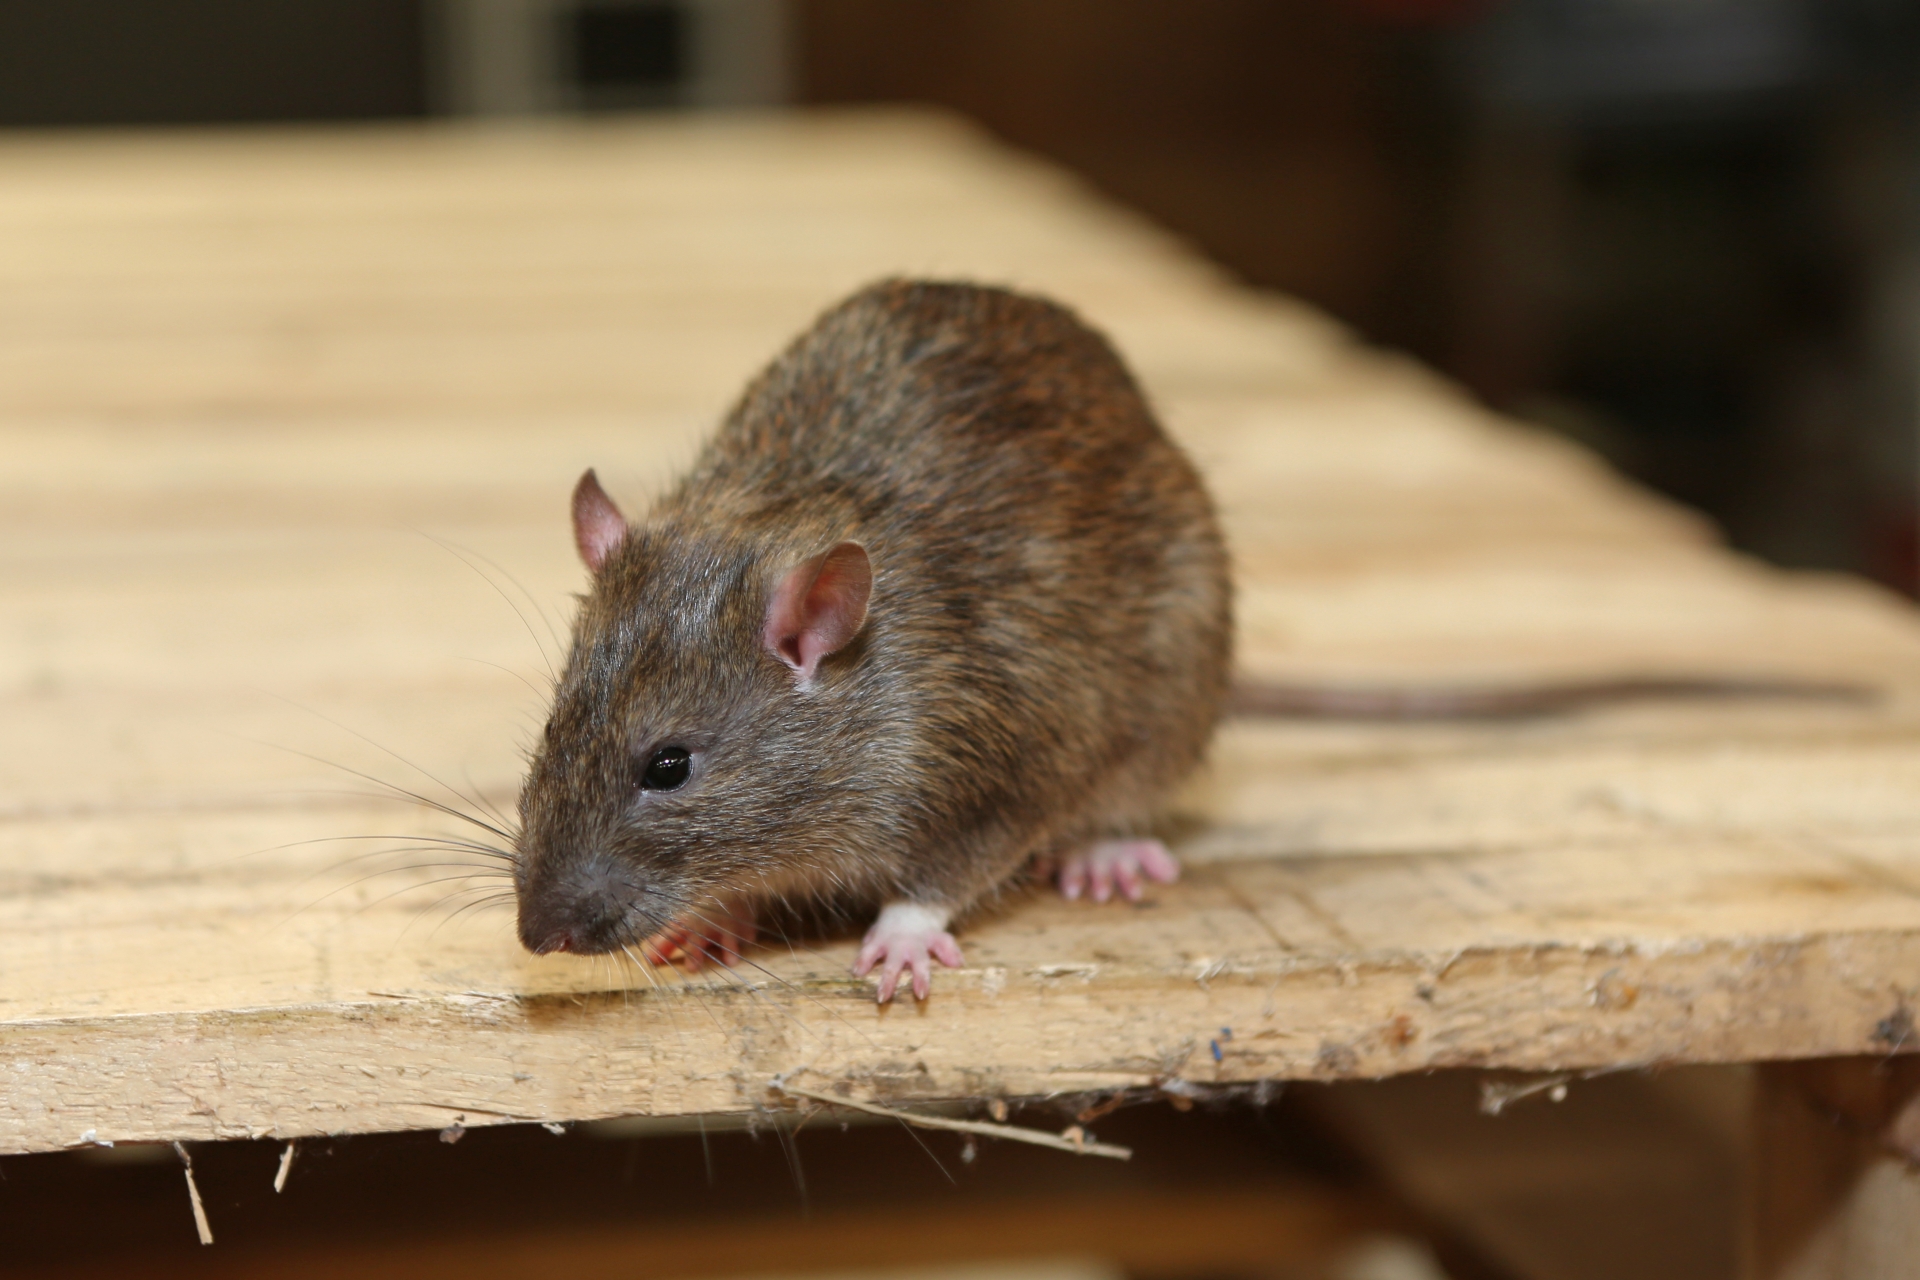 Rat extermination, Pest Control in Elephant & Castle, SE17. Call Now 020 8166 9746